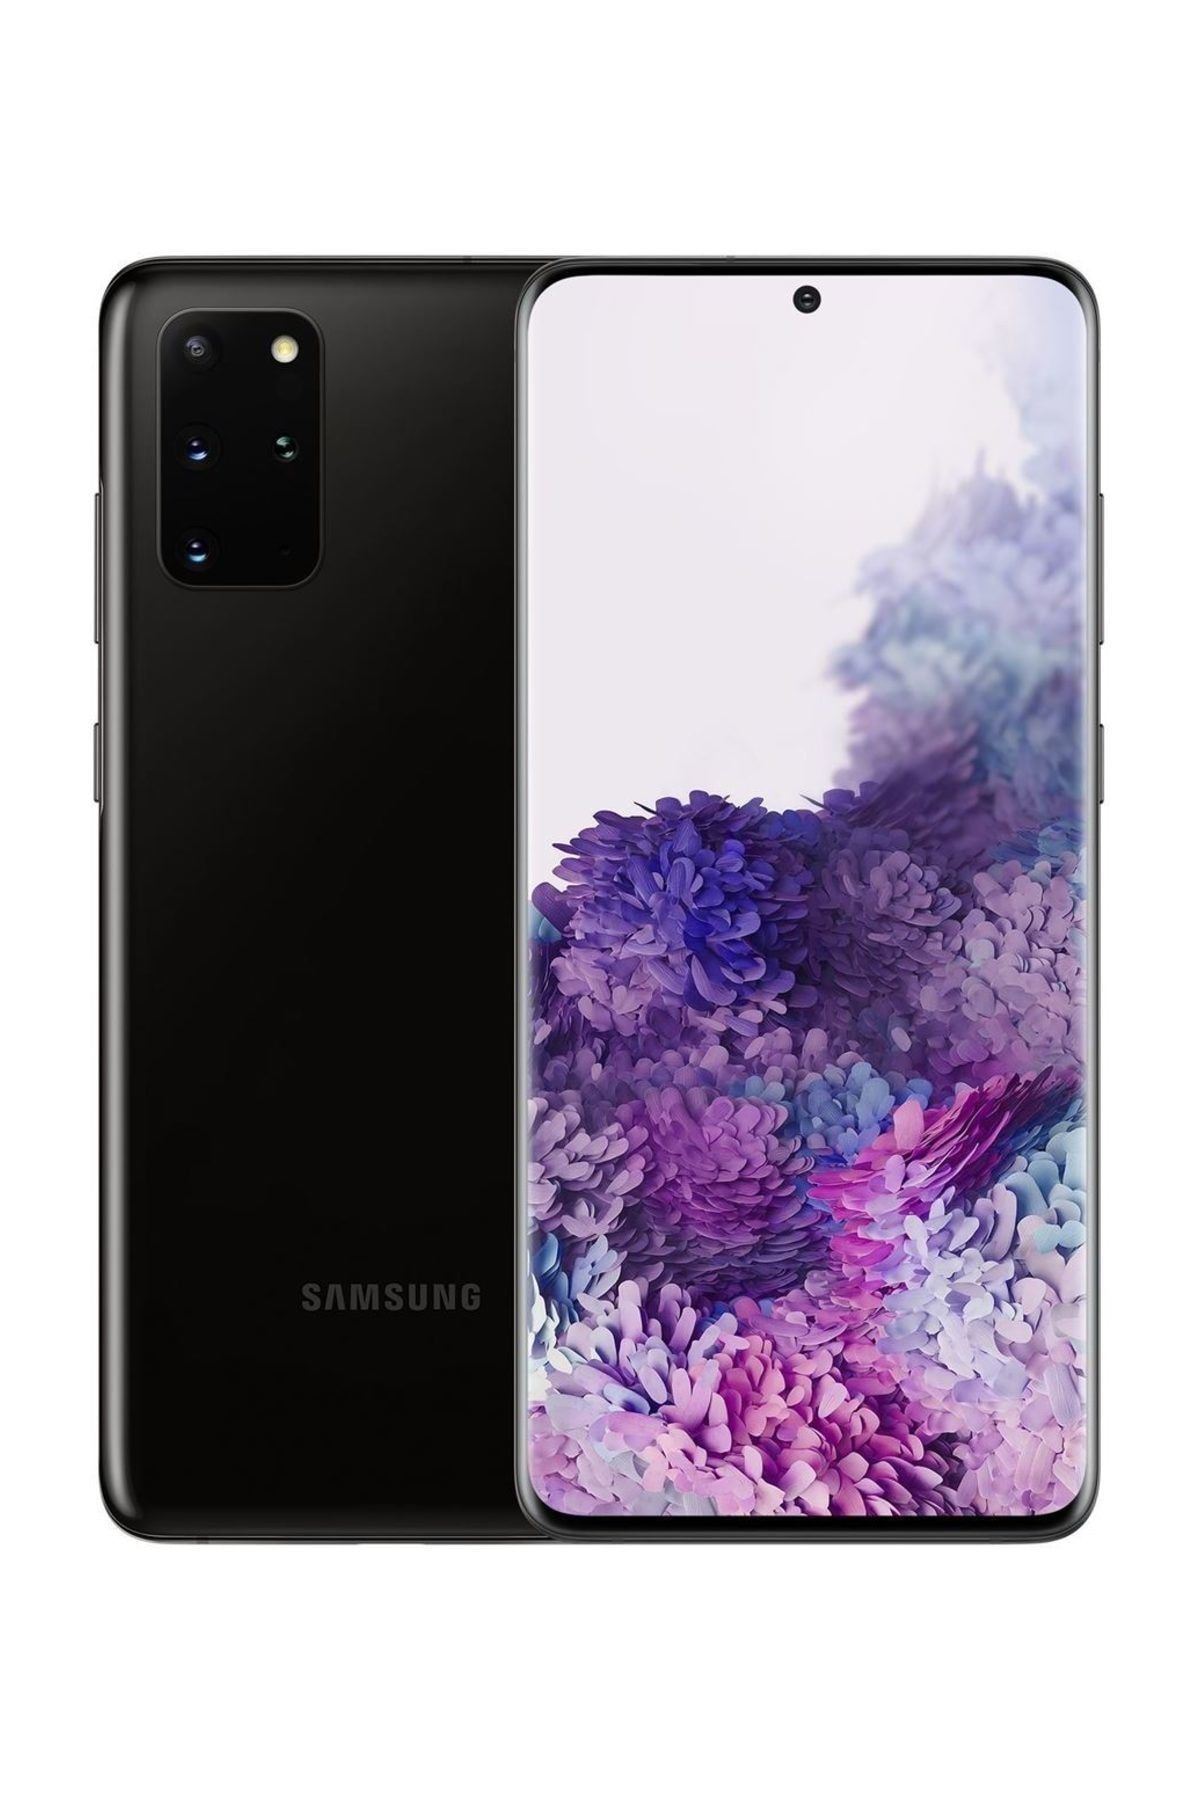 Samsung Galaxy S20 Ultra 128 GB Siyah Cep Telefonu (Samsung Türkiye Garantili)